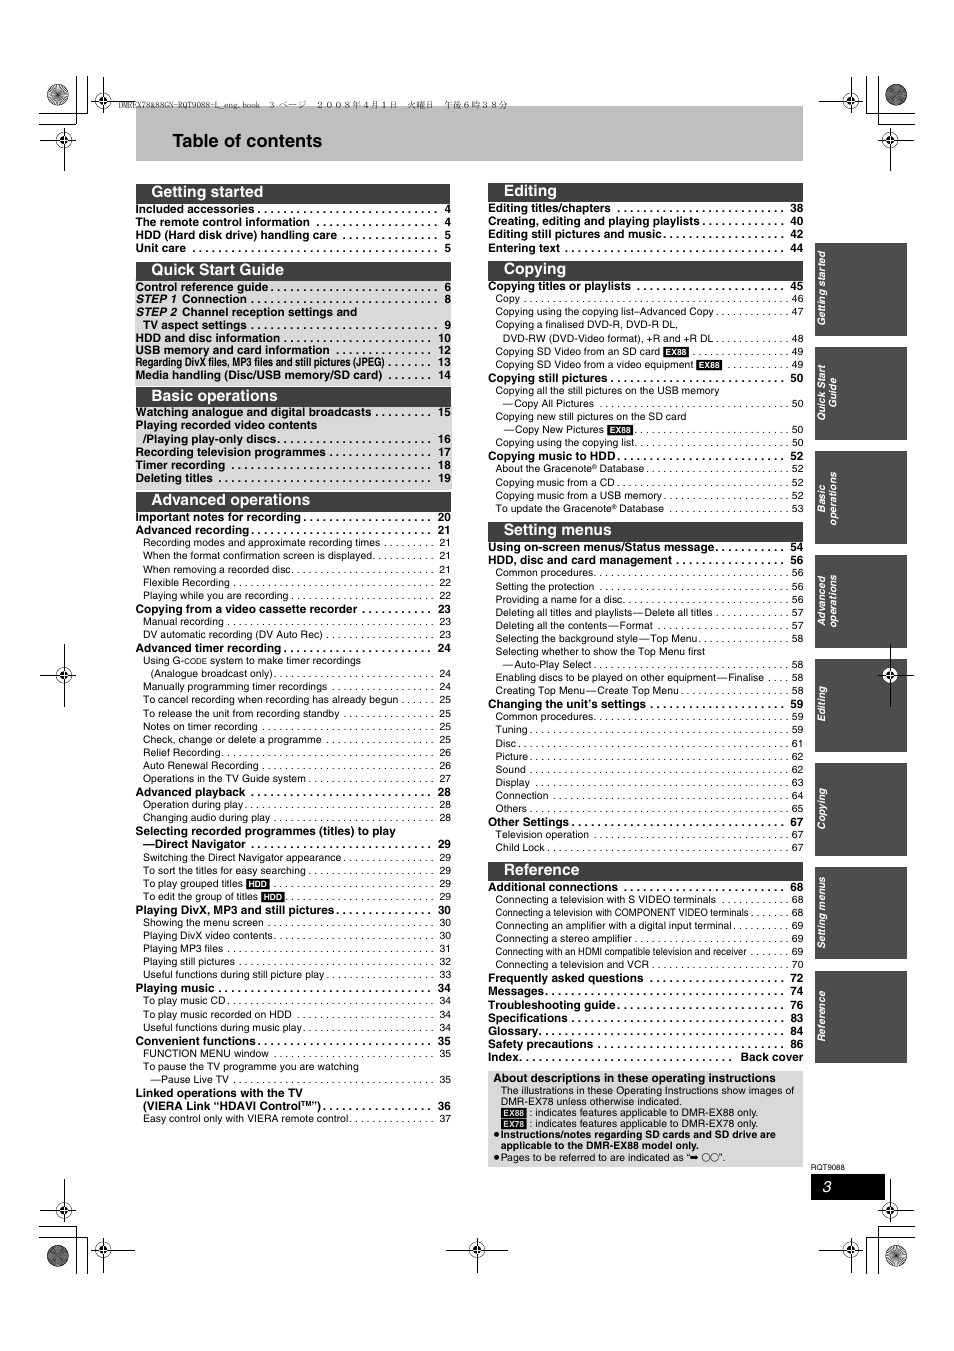 Panasonic DMR-EX78 User Manual | Page 3 / 88